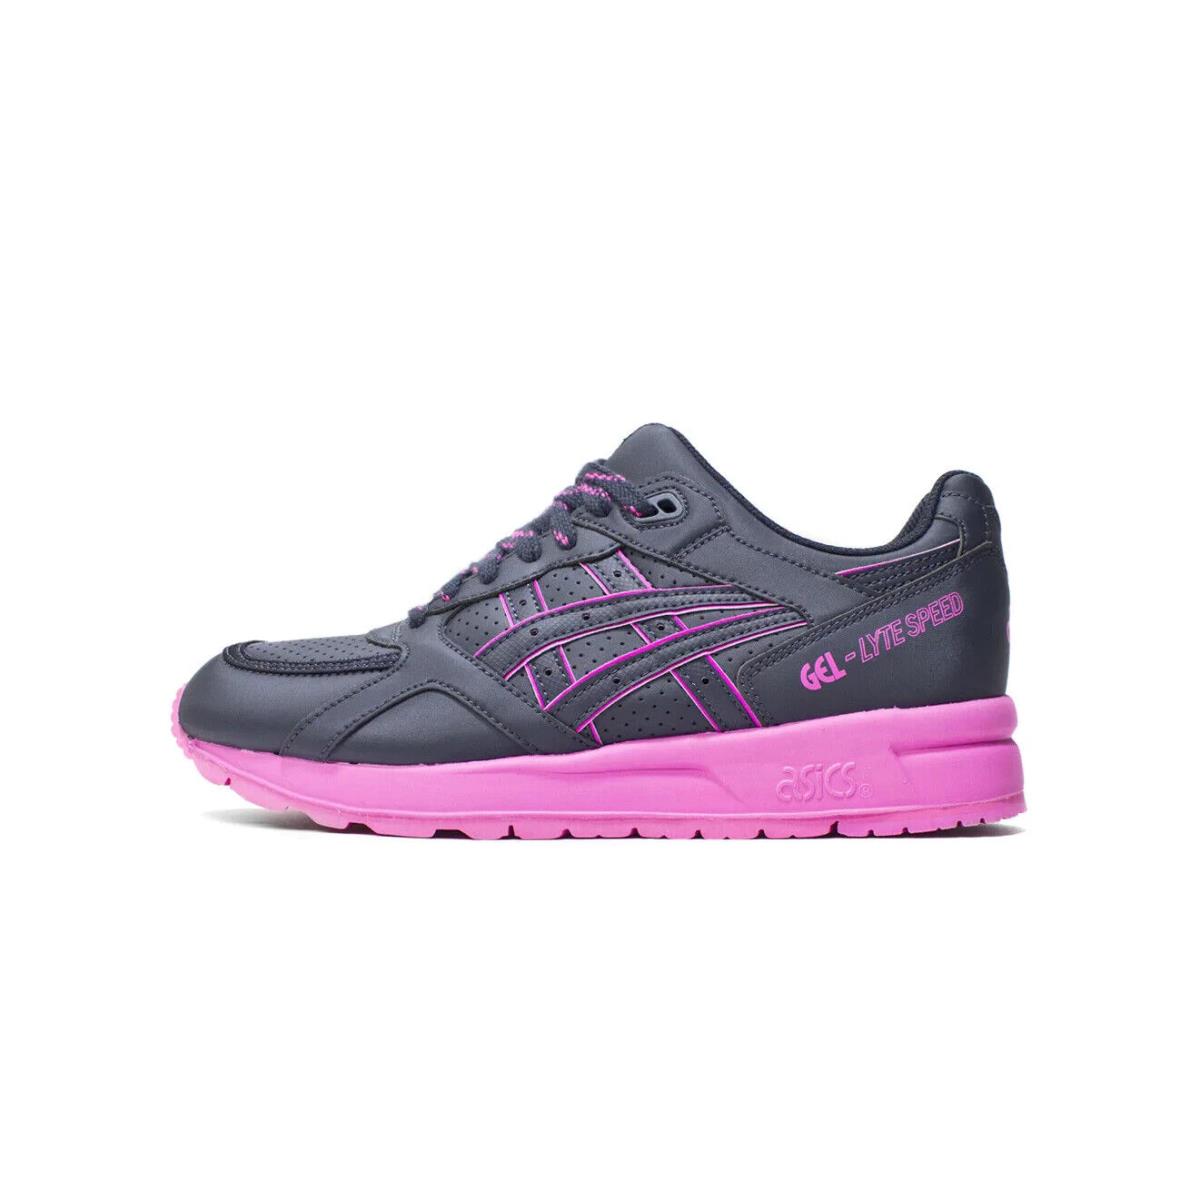 Asics Gel-lyte Speed H616y-5050 Men`s Indian Ink/pink Running Shoes Size 5 PB650 - Indian Ink/Pink